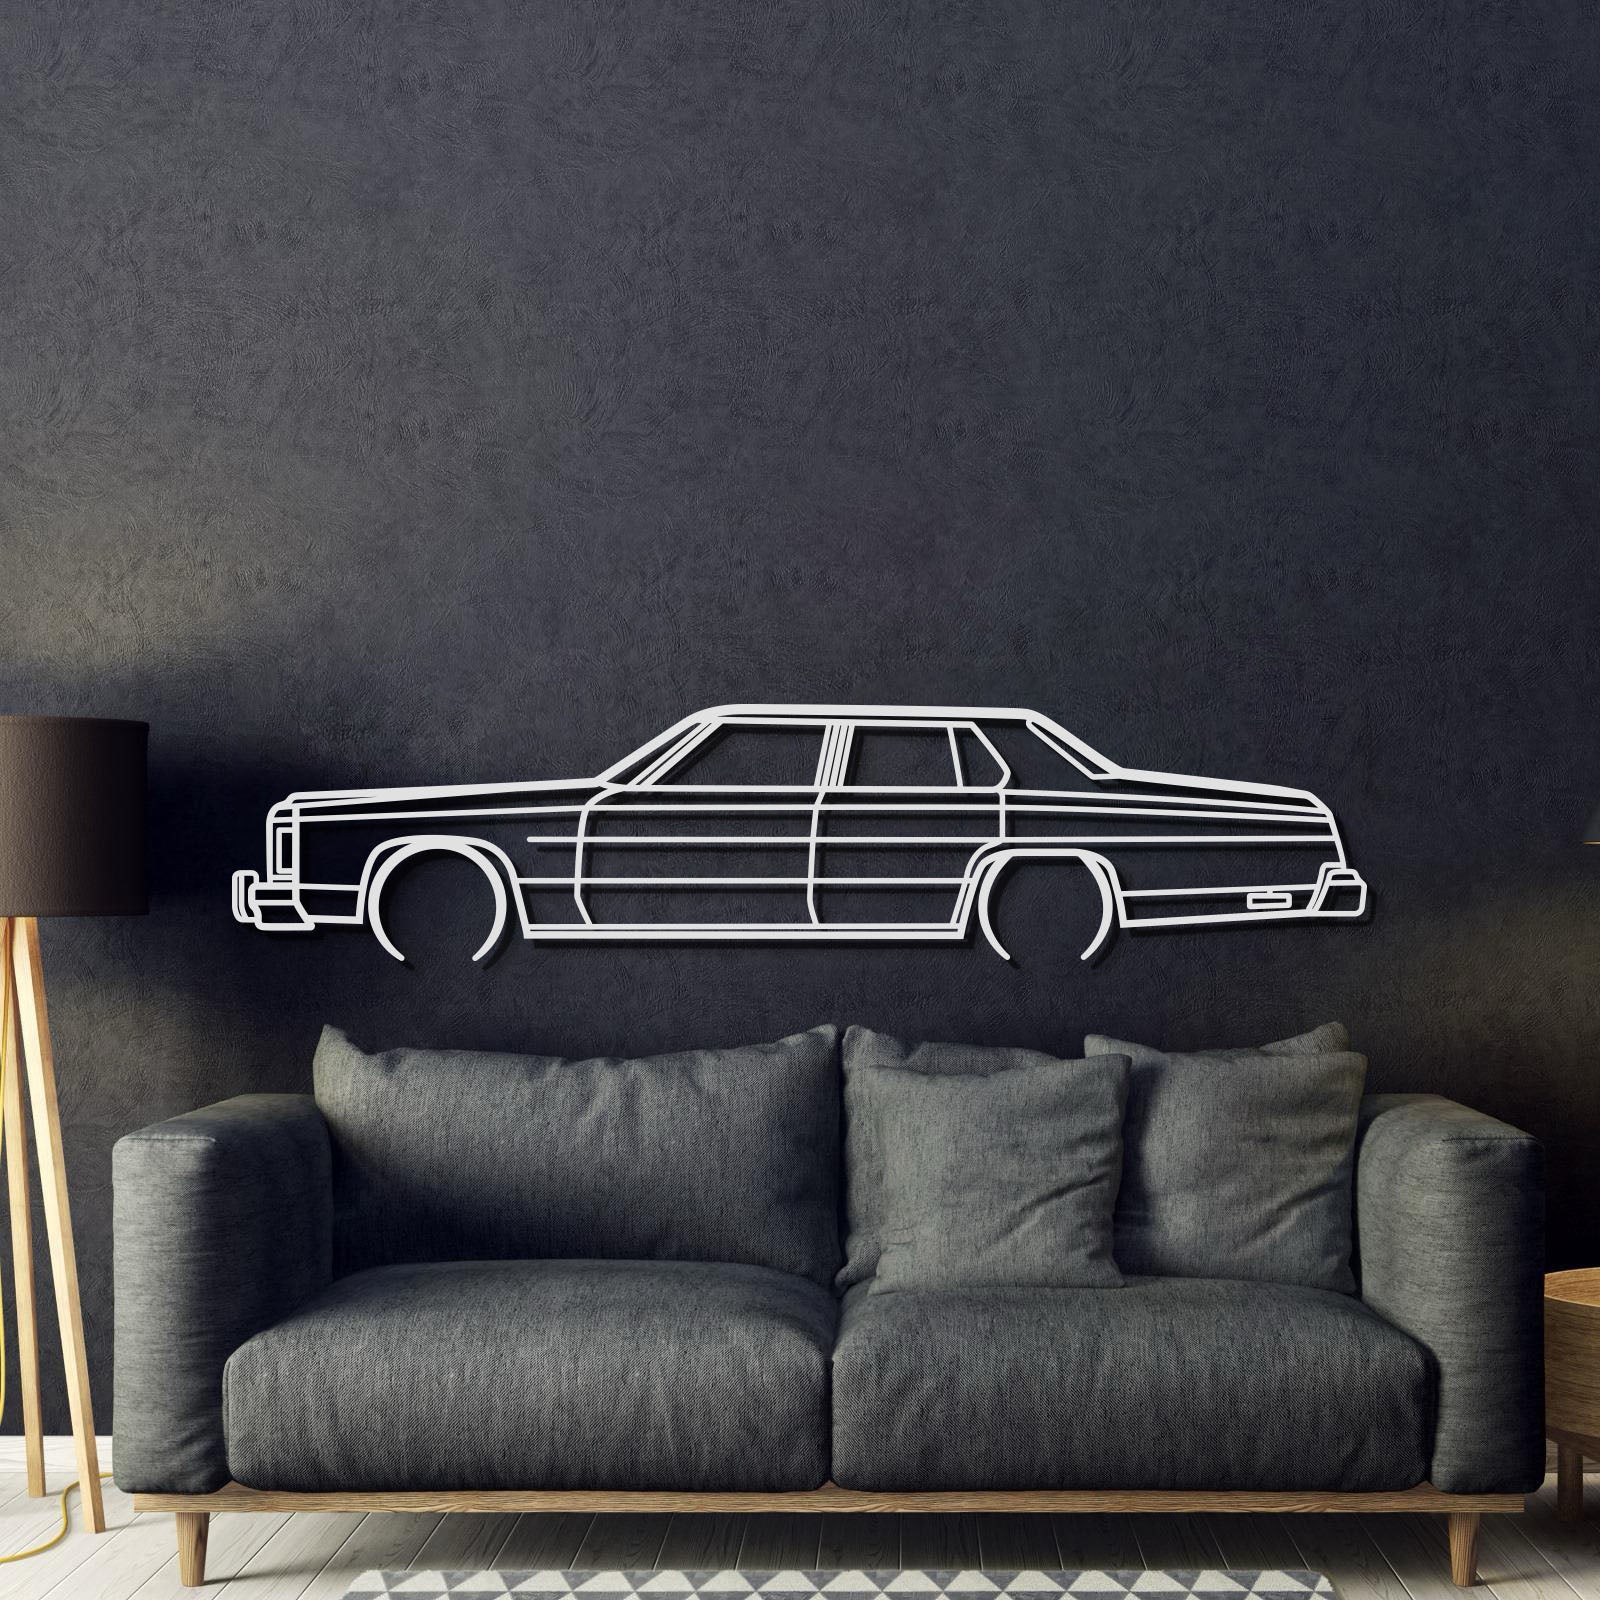 1975 Impala Detailed Metal Car Wall Art - MT0169